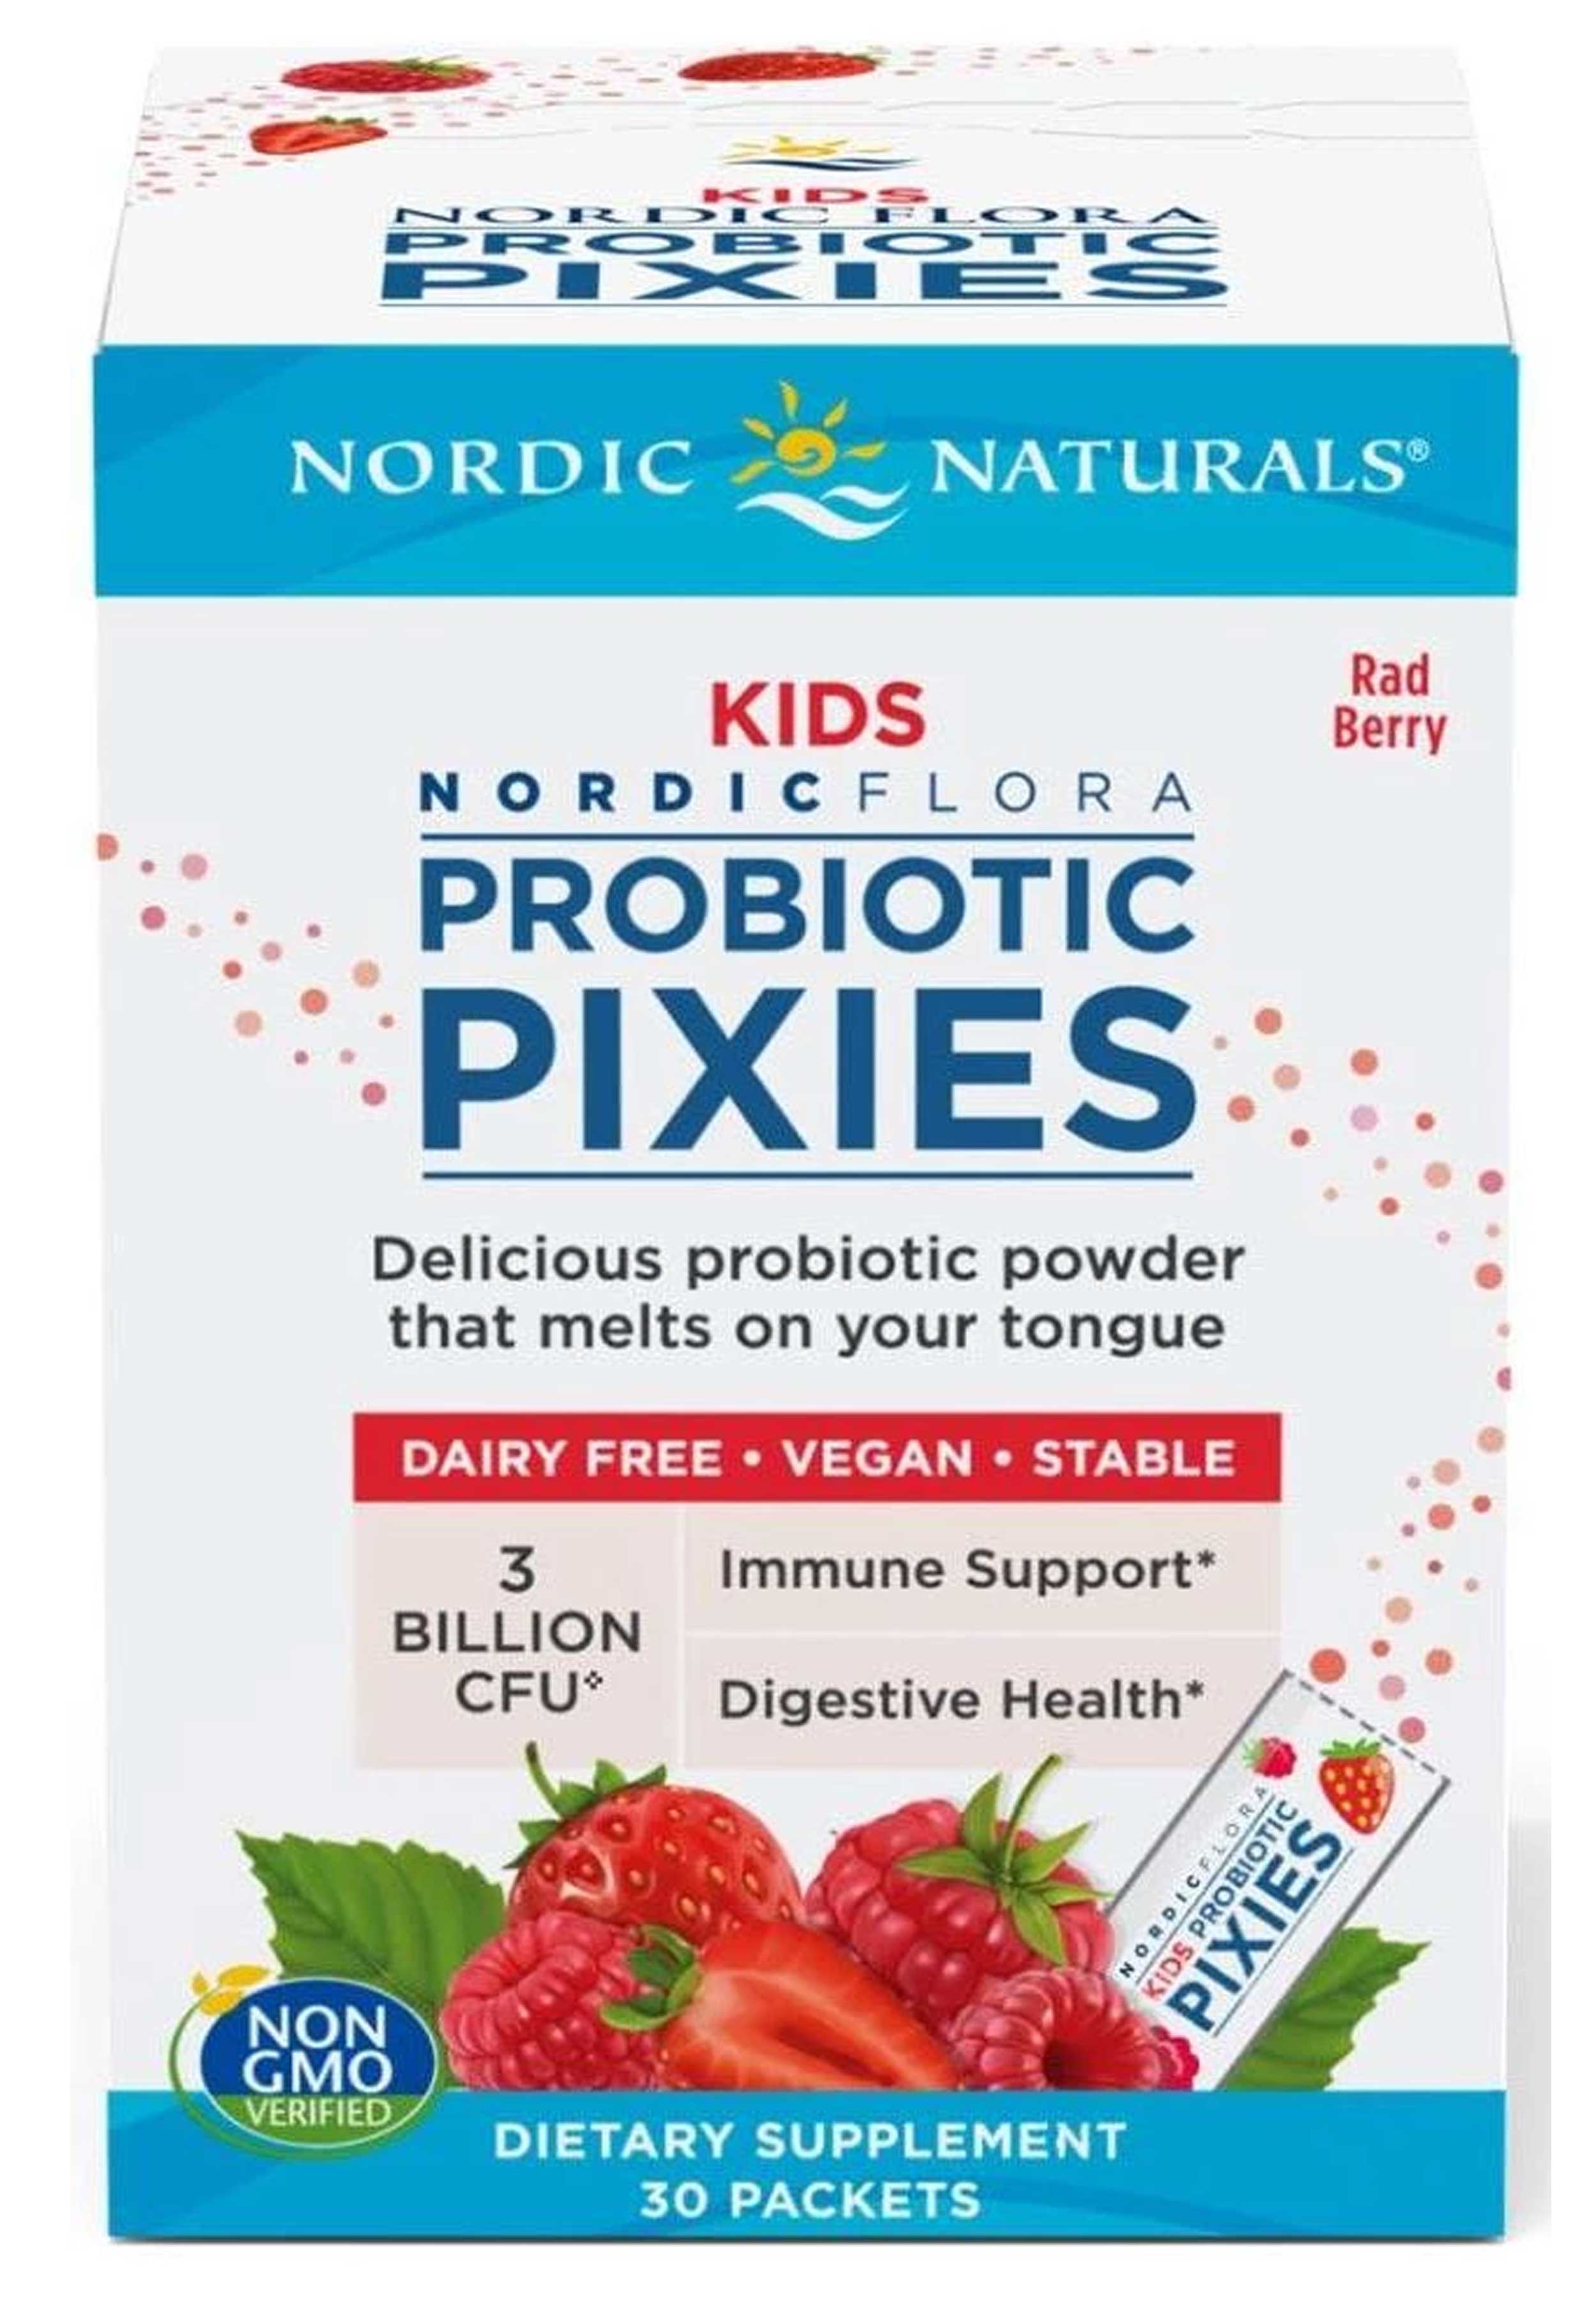 Nordic Naturals Kids Probiotic Pixies